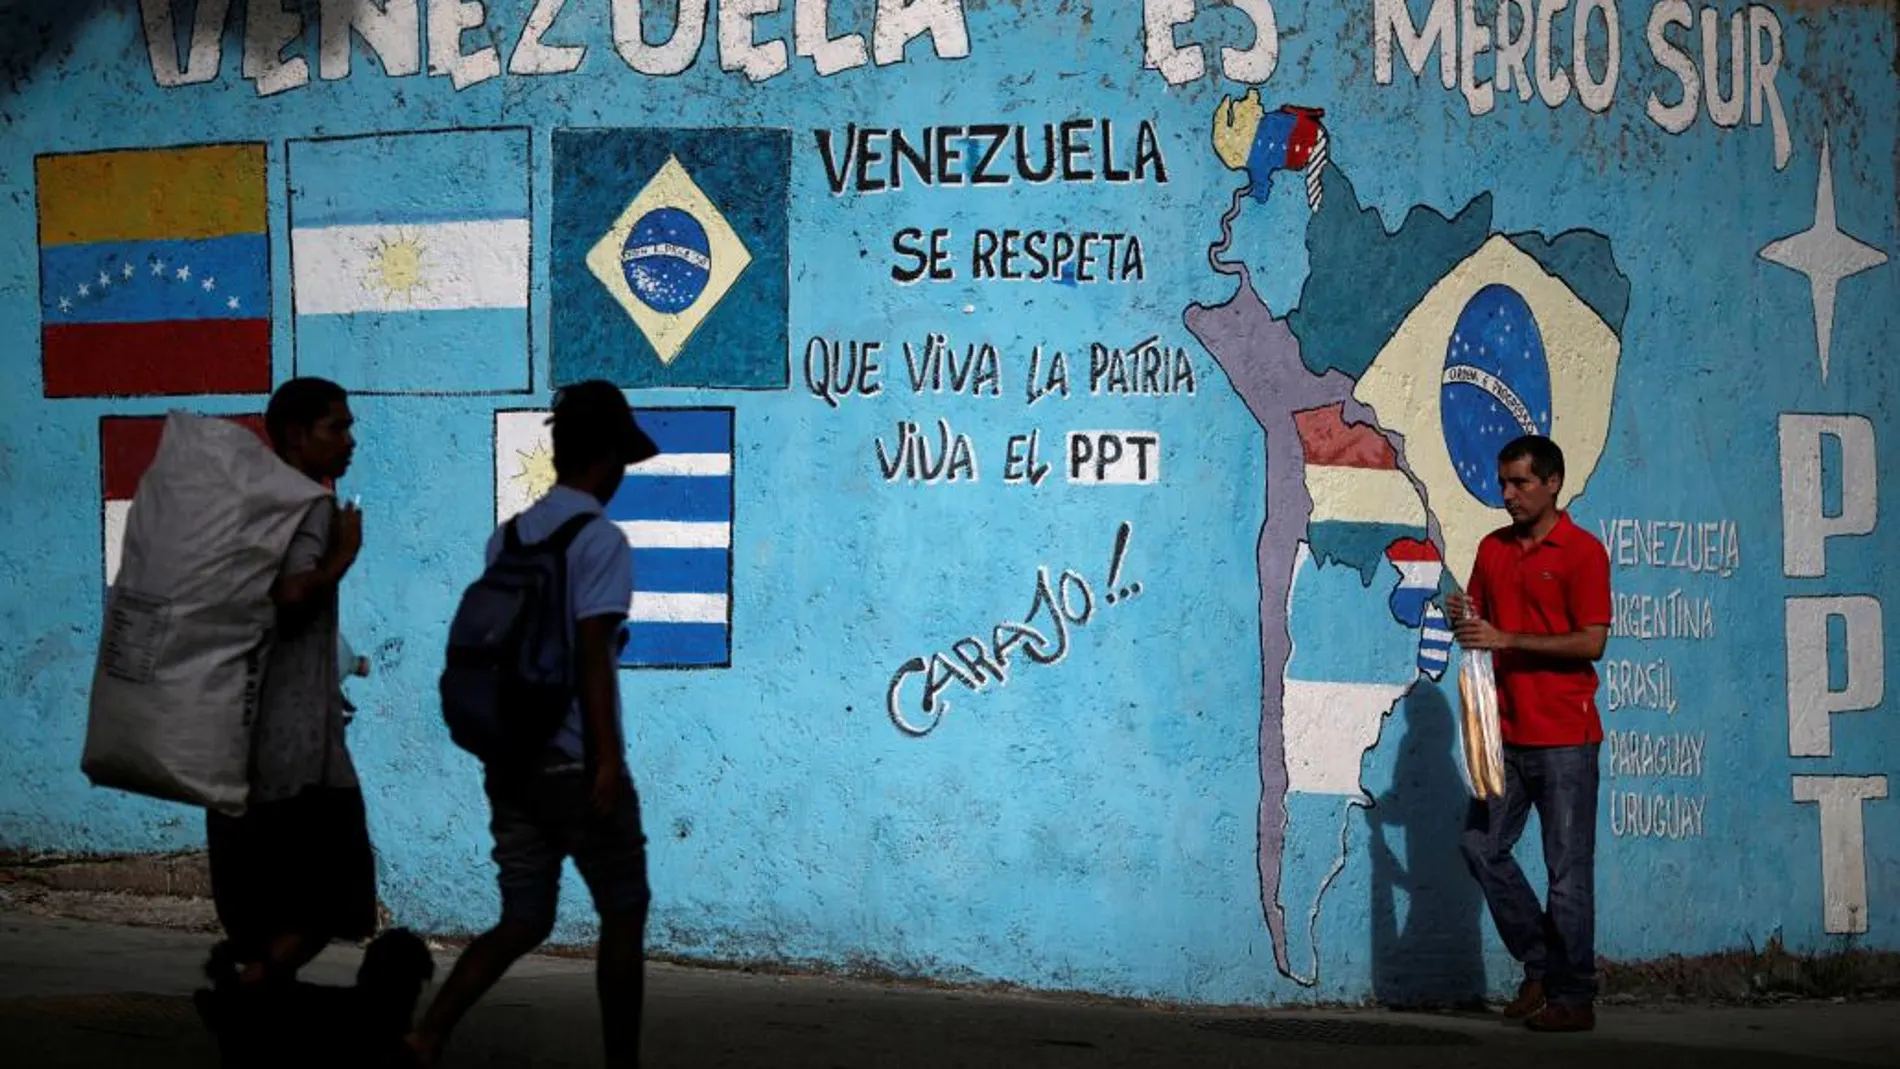 Un graffiti a favor de MERCOSUR en una calle de Caracas, Venezuela